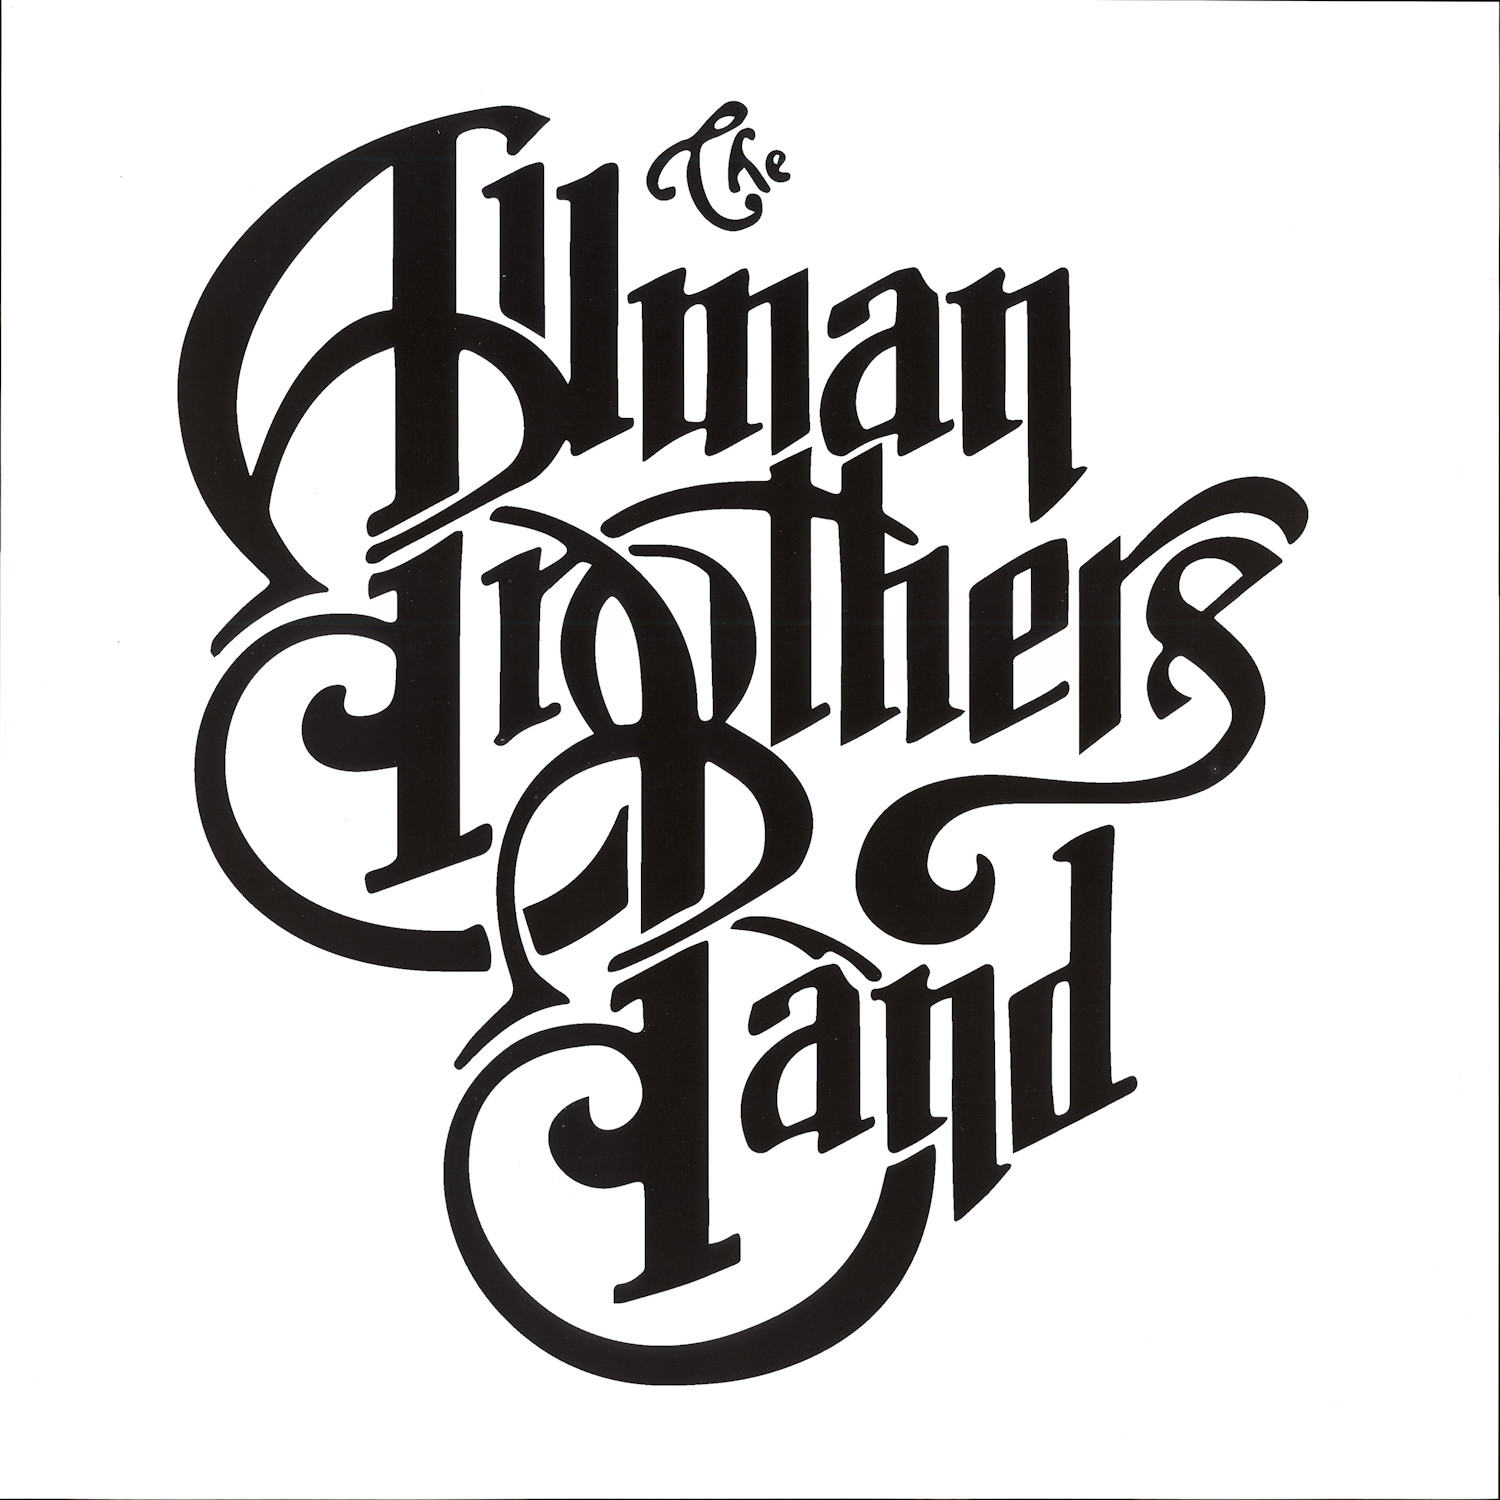 Brothers дискография. The Allman brothers Band. The Allman brothers Band logo. Allman brothers Band логотип. The Allman brothers Band the Allman brothers Band.